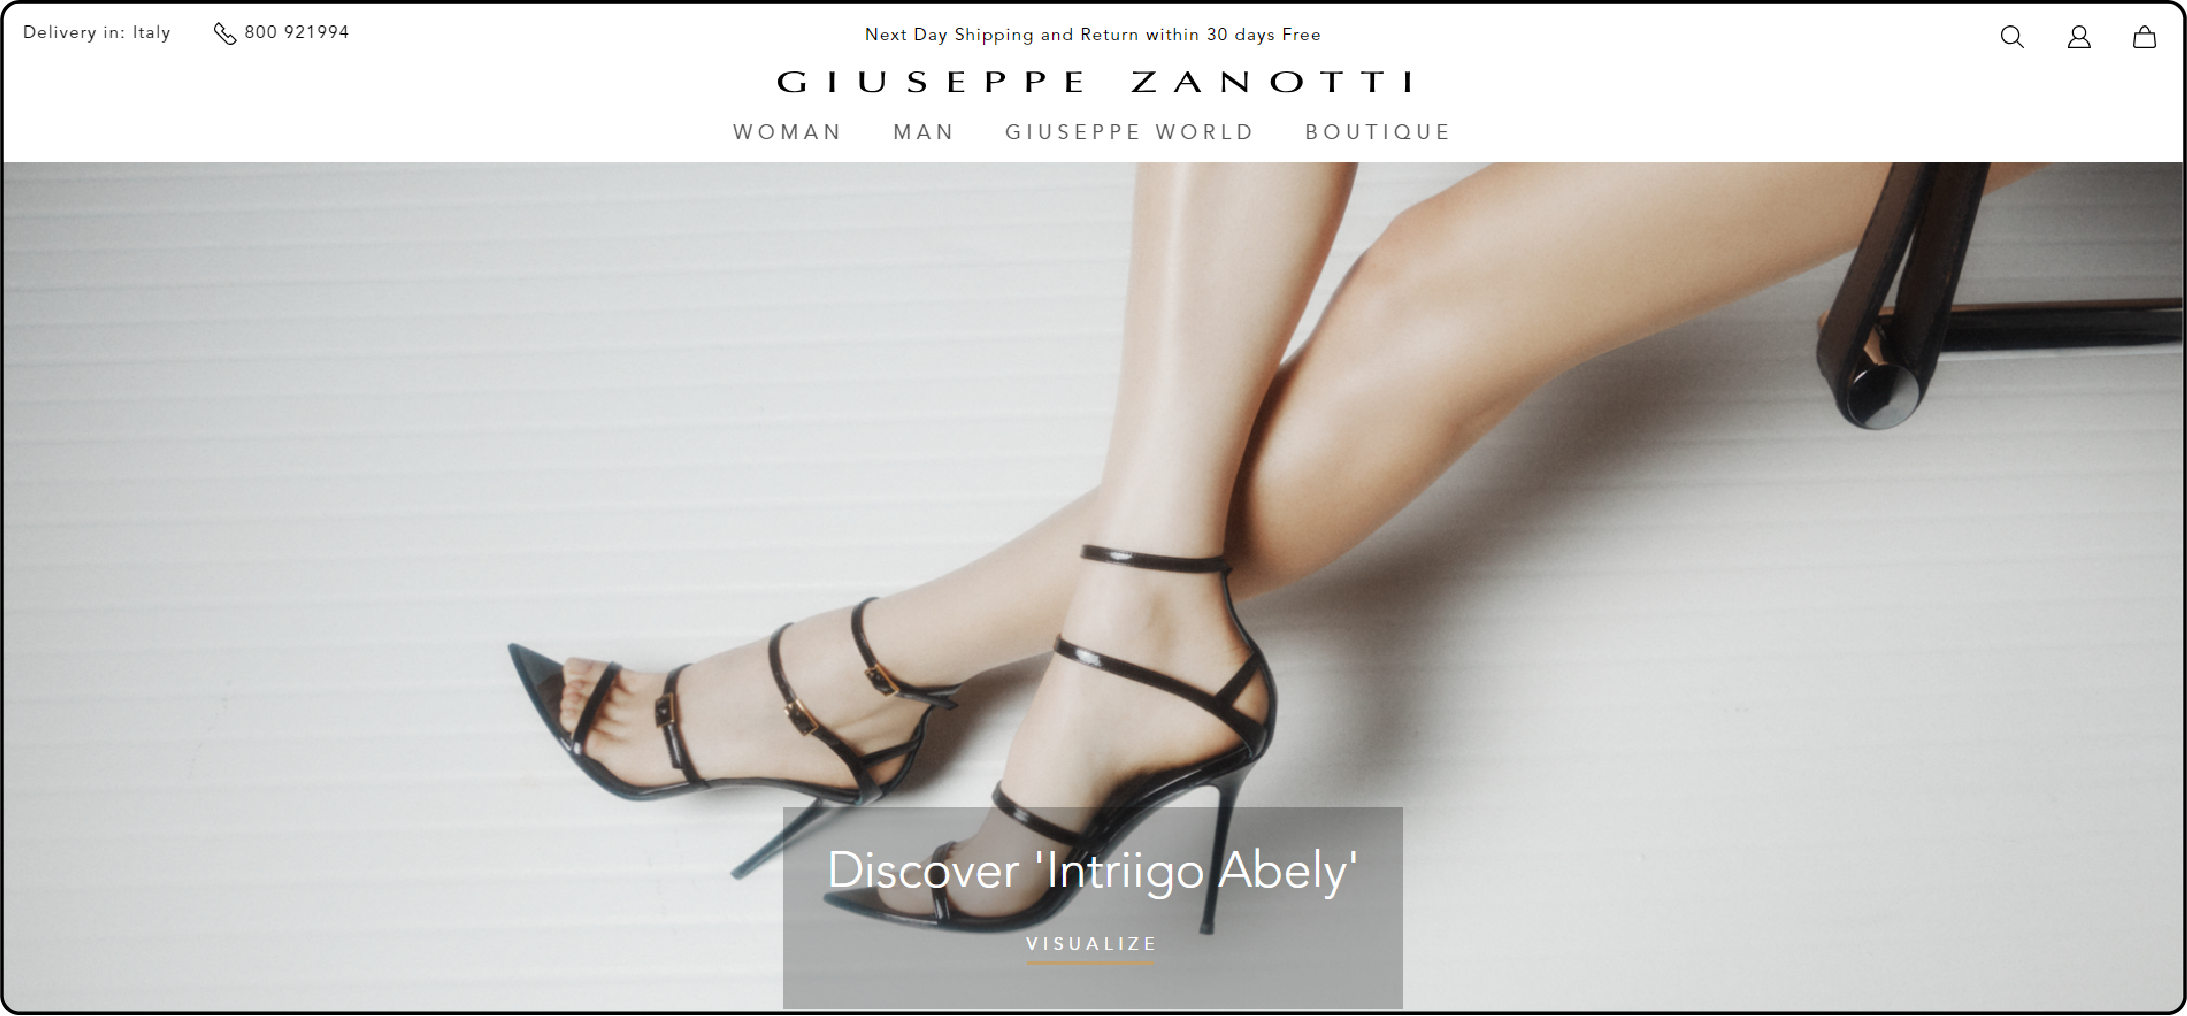 Giuseppe Zanotti's Magento store offering luxury footwear